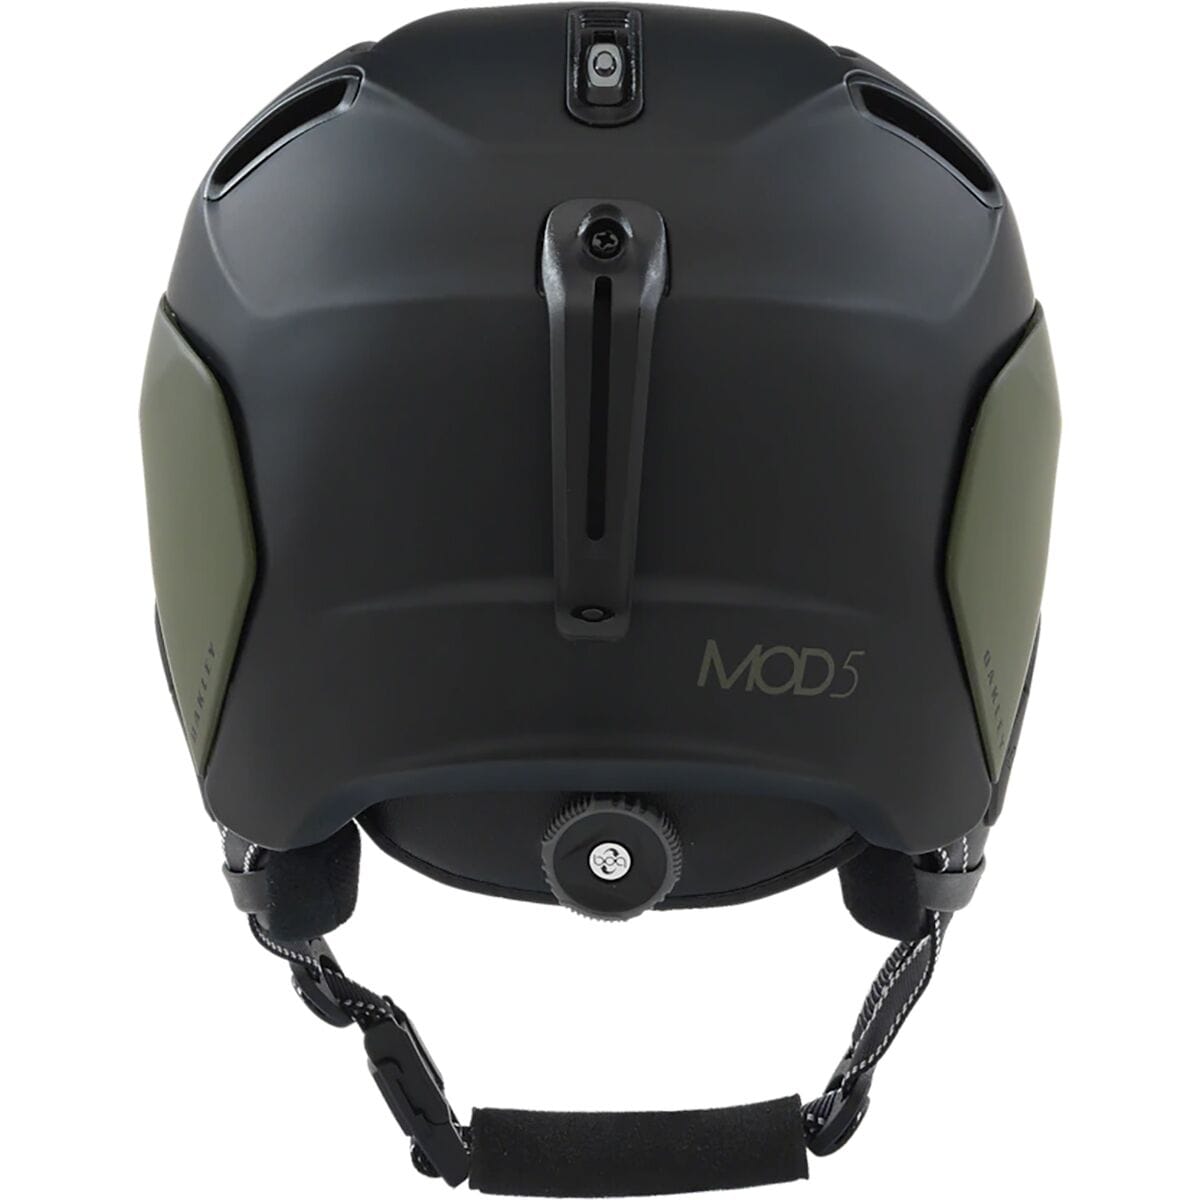 Summon Ban Achievement Oakley Mod5 Helmet - Ski